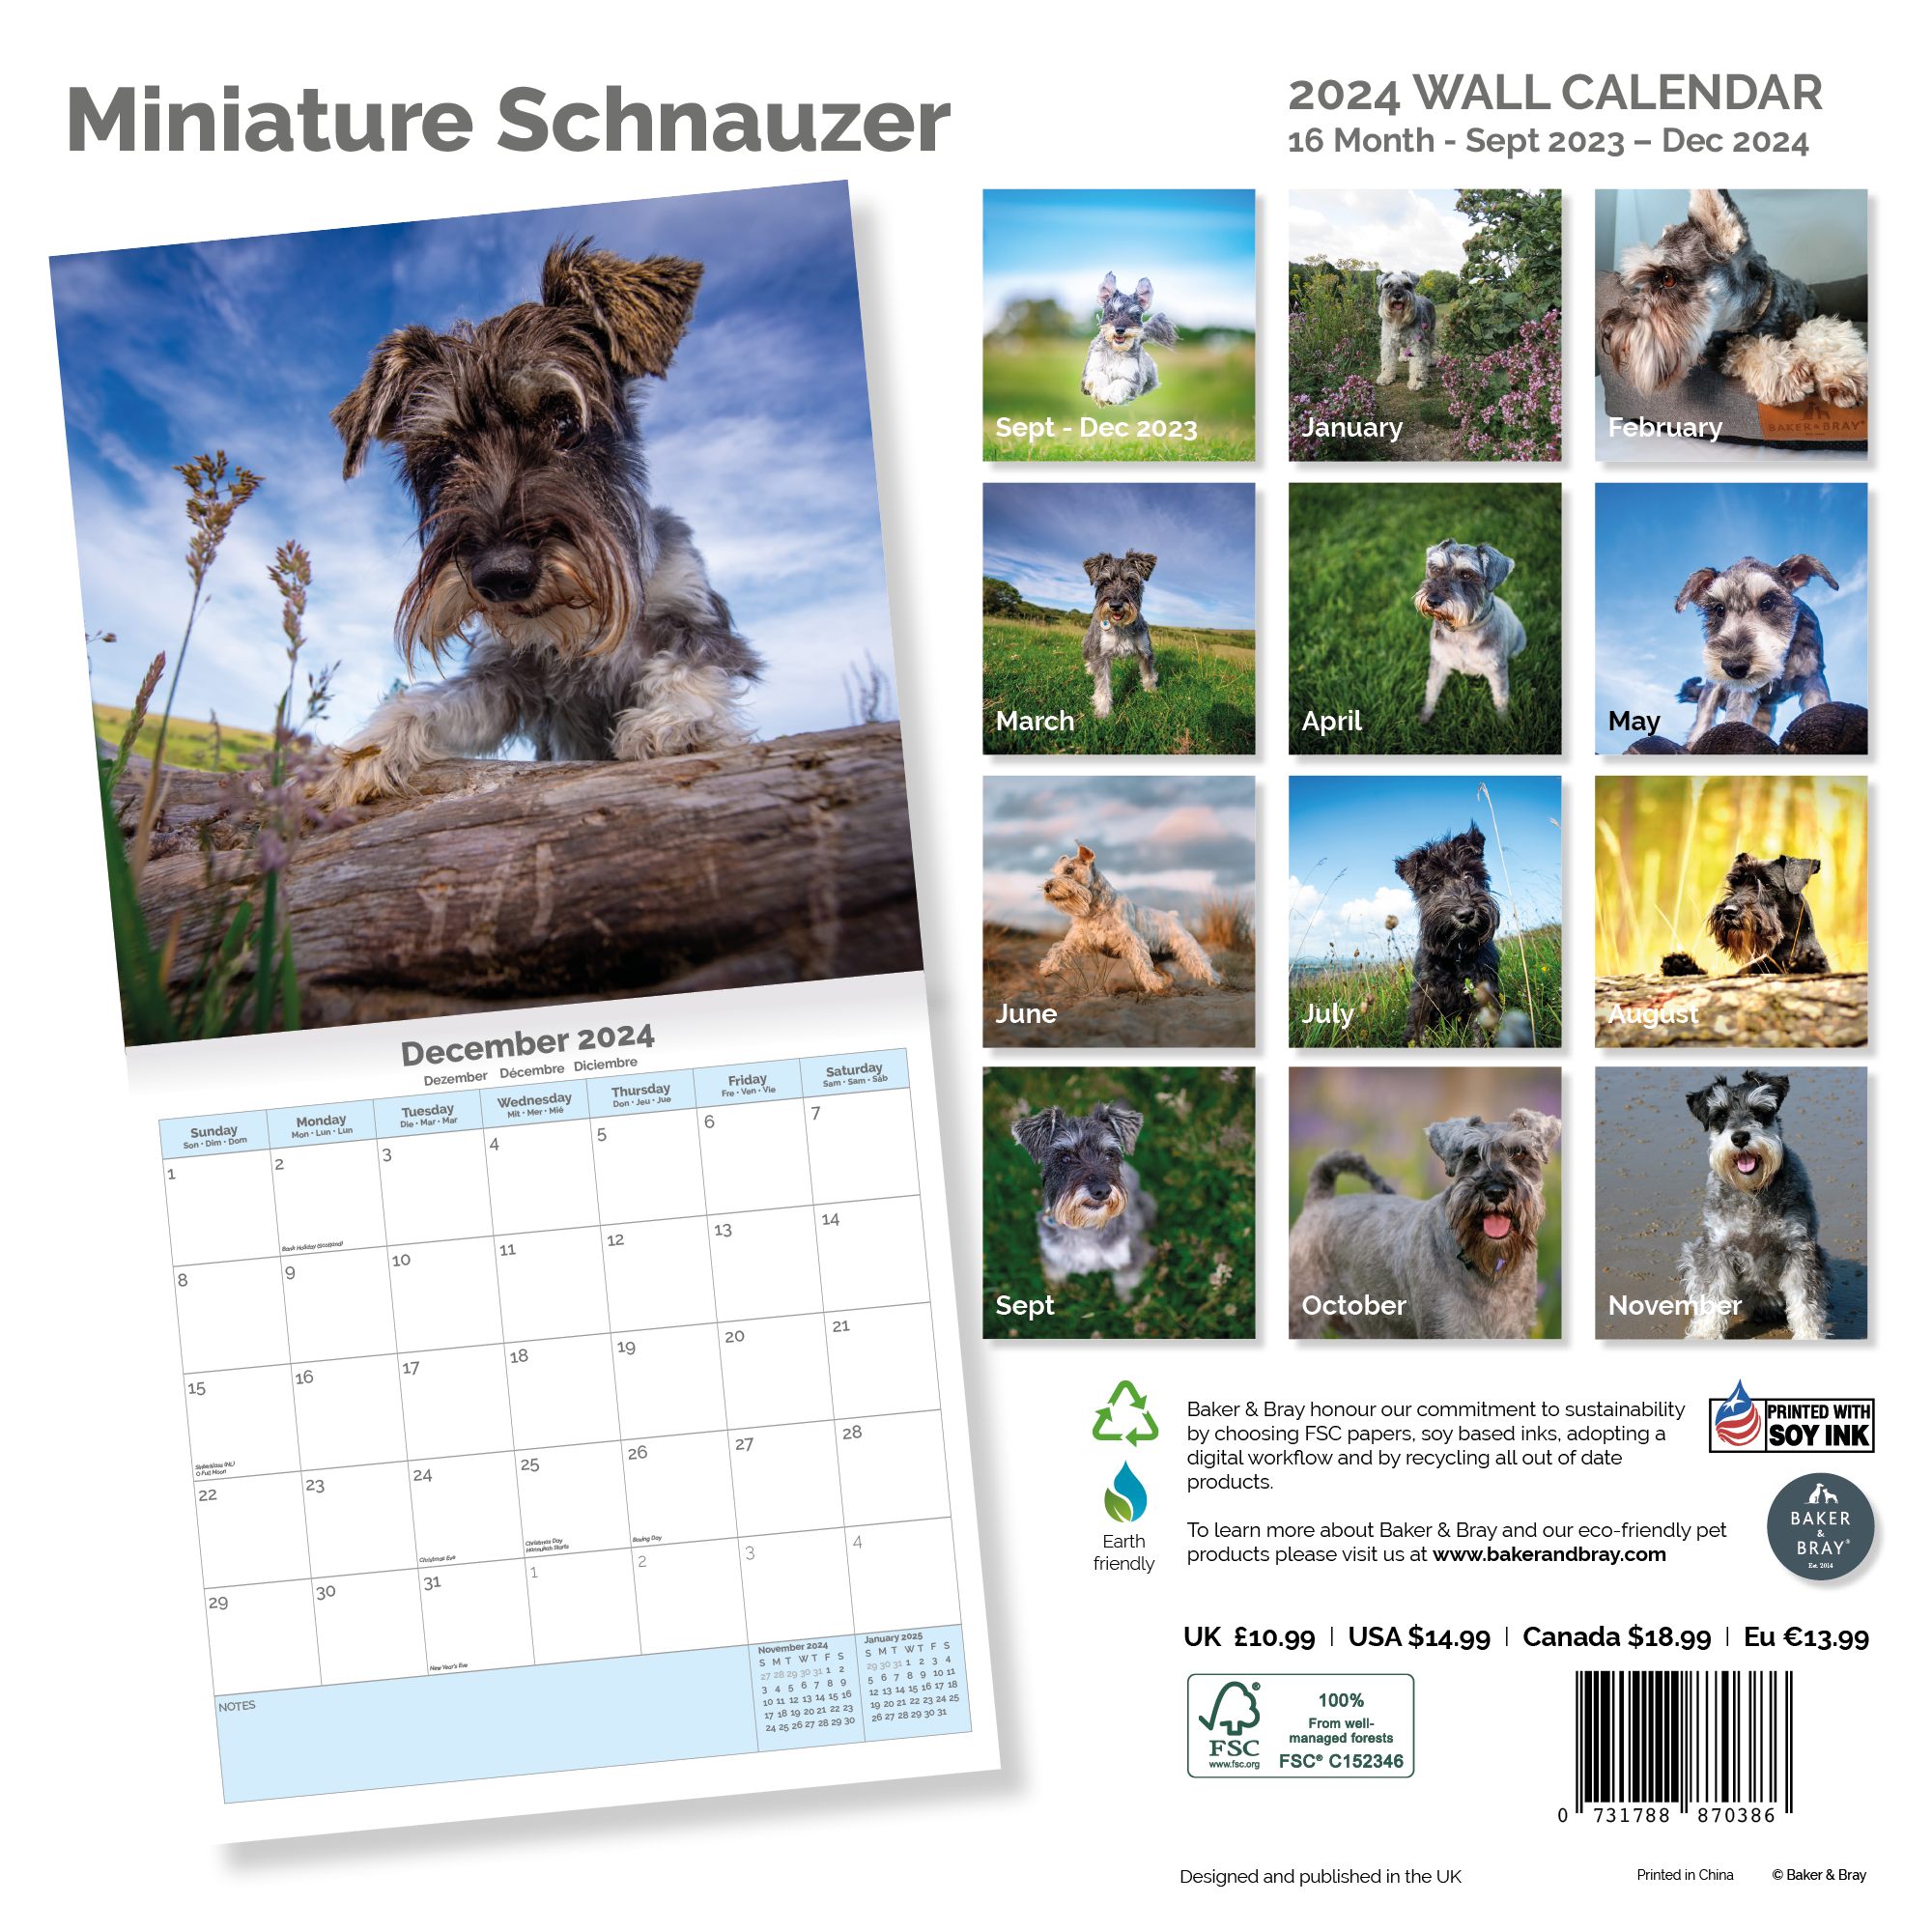 Miniature schnauzer Calendar 2024